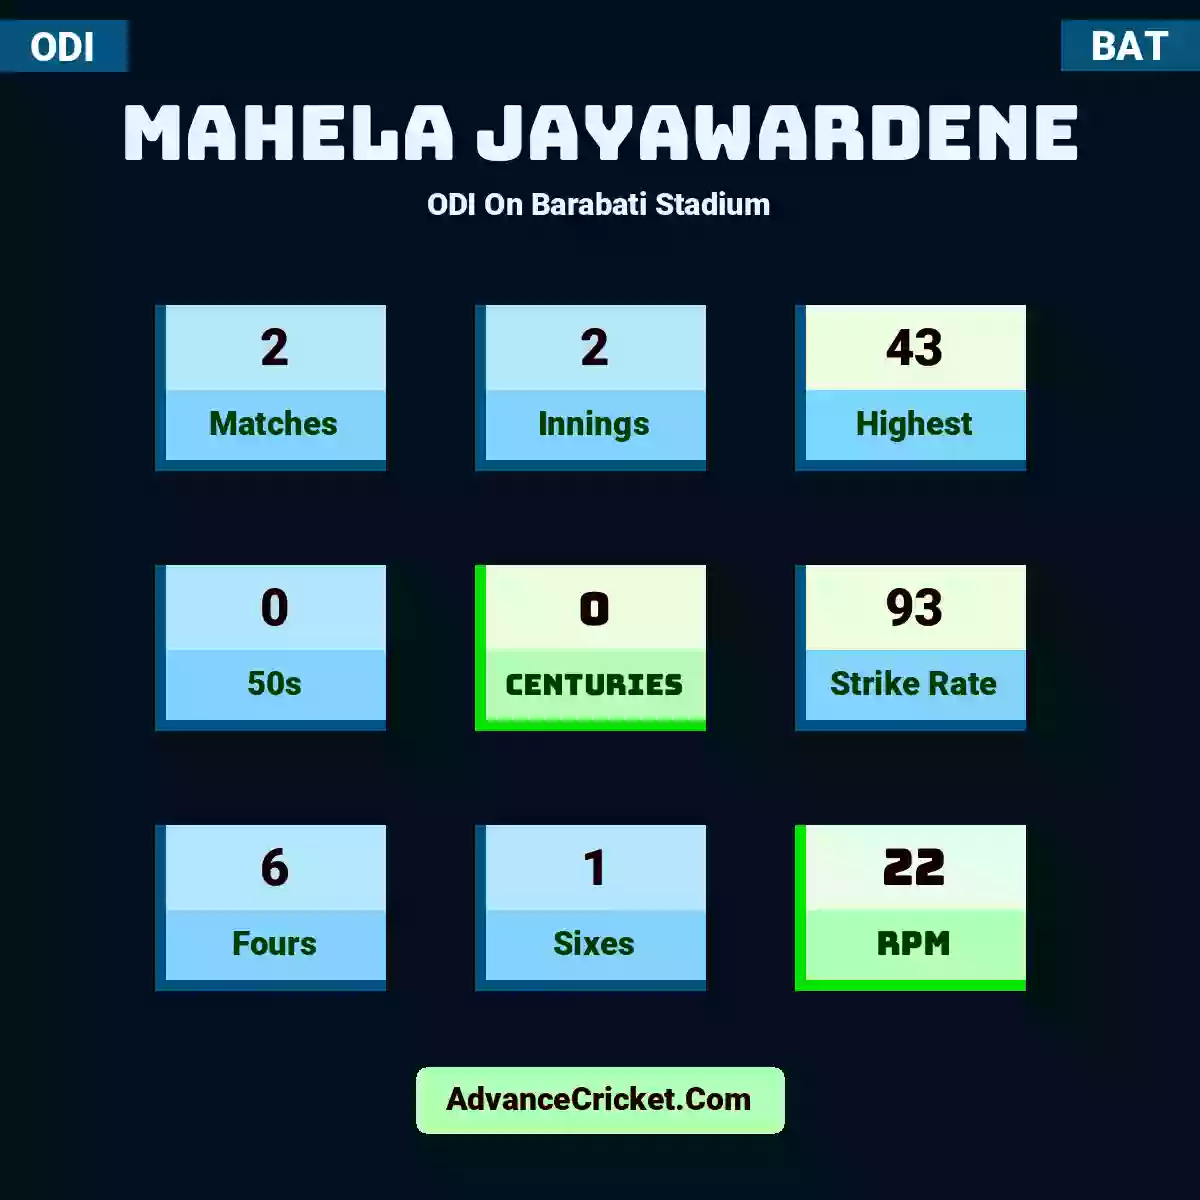 Mahela Jayawardene ODI  On Barabati Stadium, Mahela Jayawardene played 2 matches, scored 43 runs as highest, 0 half-centuries, and 0 centuries, with a strike rate of 93. M.Jayawardene hit 6 fours and 1 sixes, with an RPM of 22.